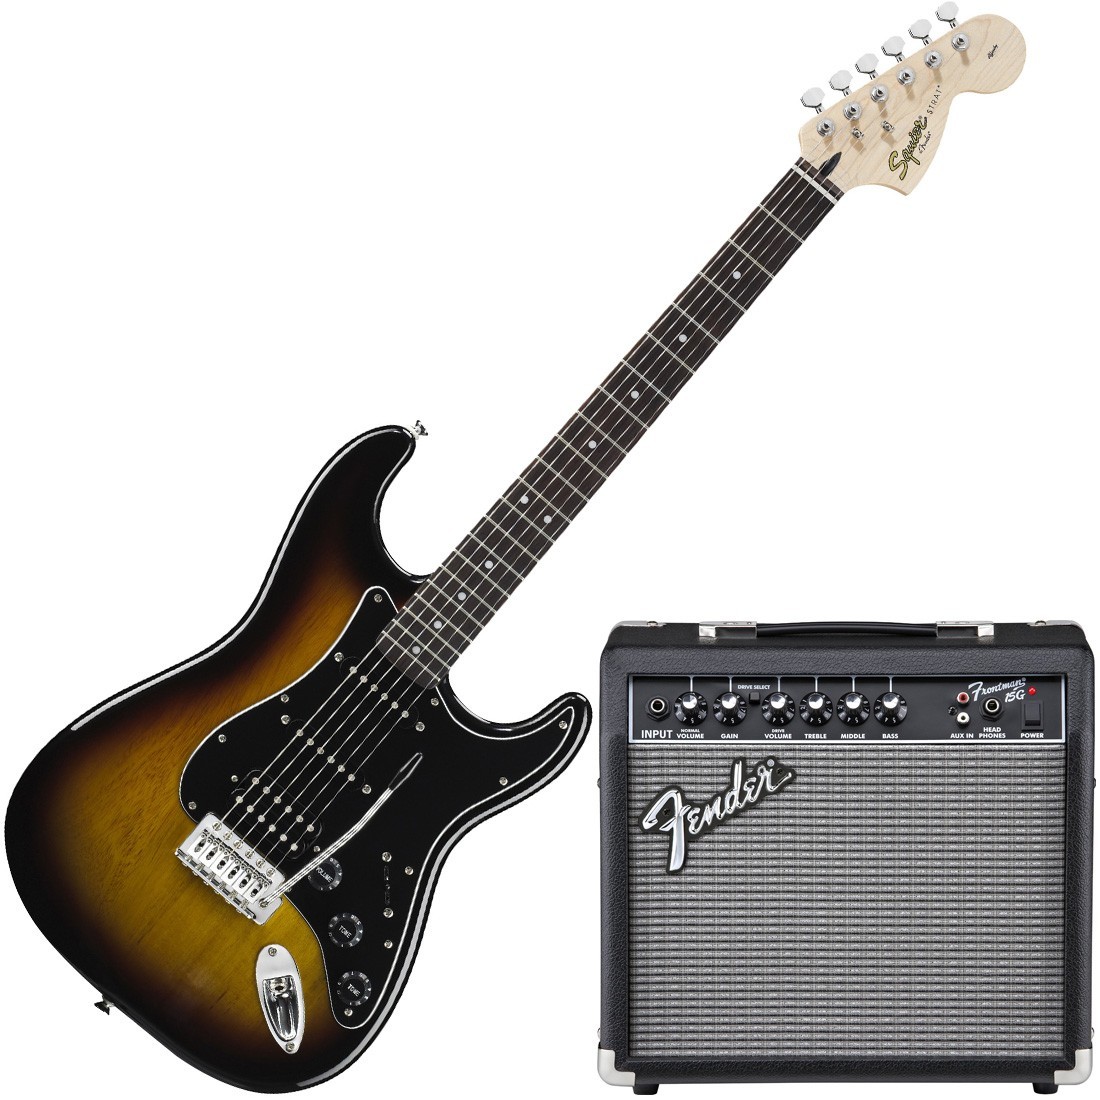 Squier stratocaster hss. Fender 15g. Frontman 15g. Fender Squier Affinity набор. Fender frontman 15g плата.